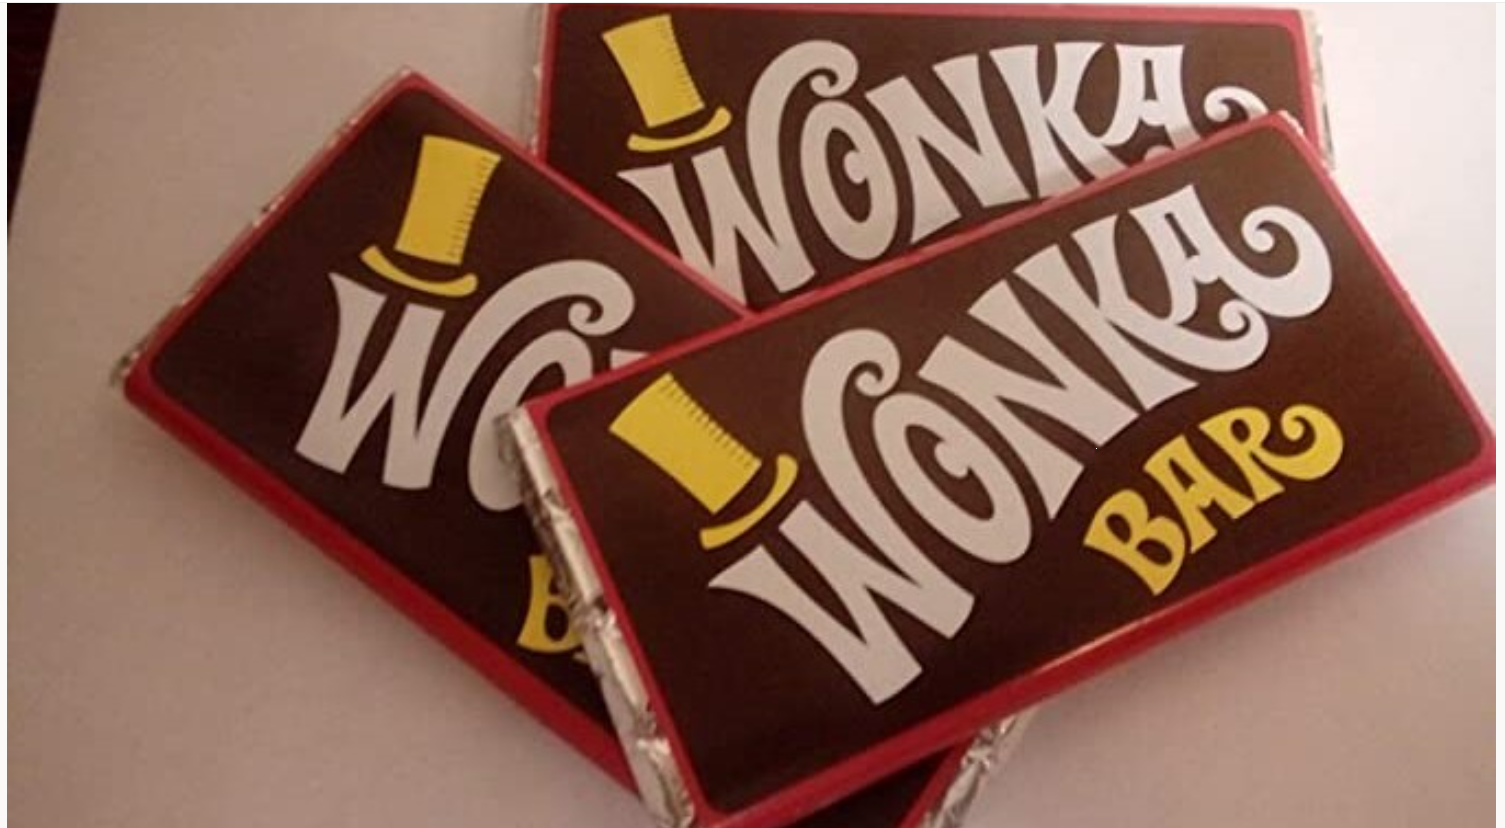 Fake 'Wonka' chocolate bars. (FSA/PA)